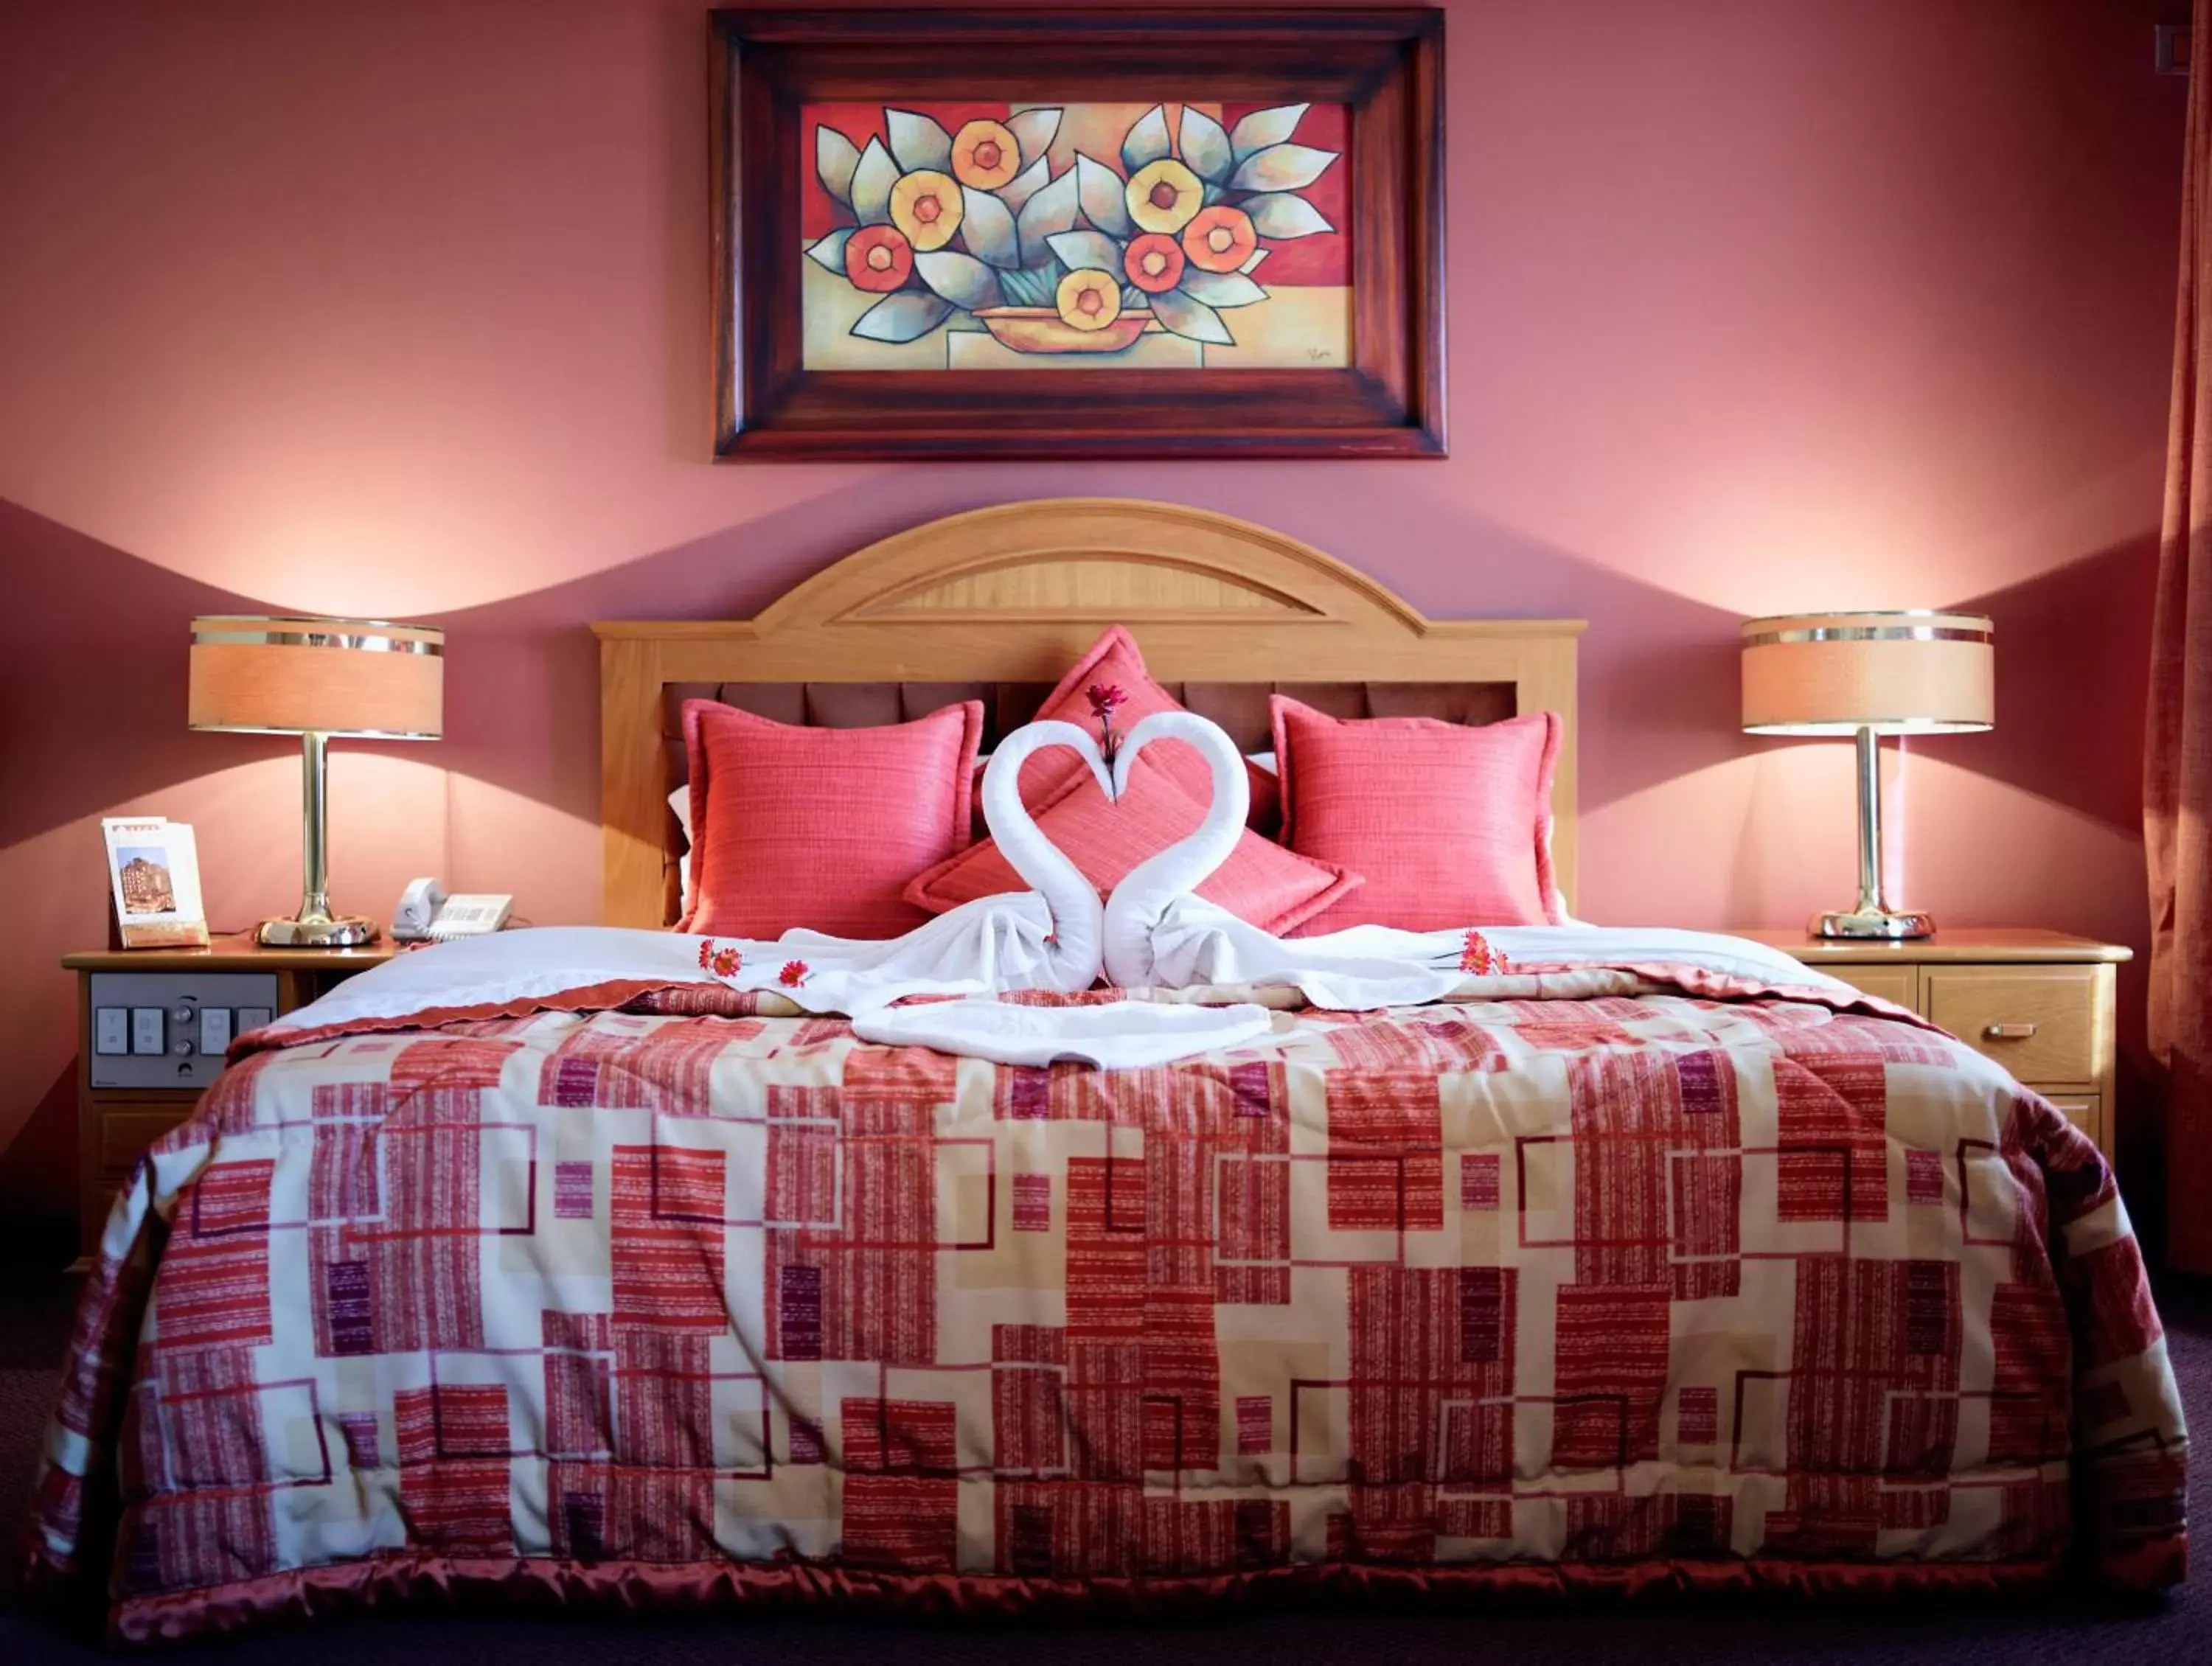 Bed, Room Photo in Cesar's Plaza Hotel